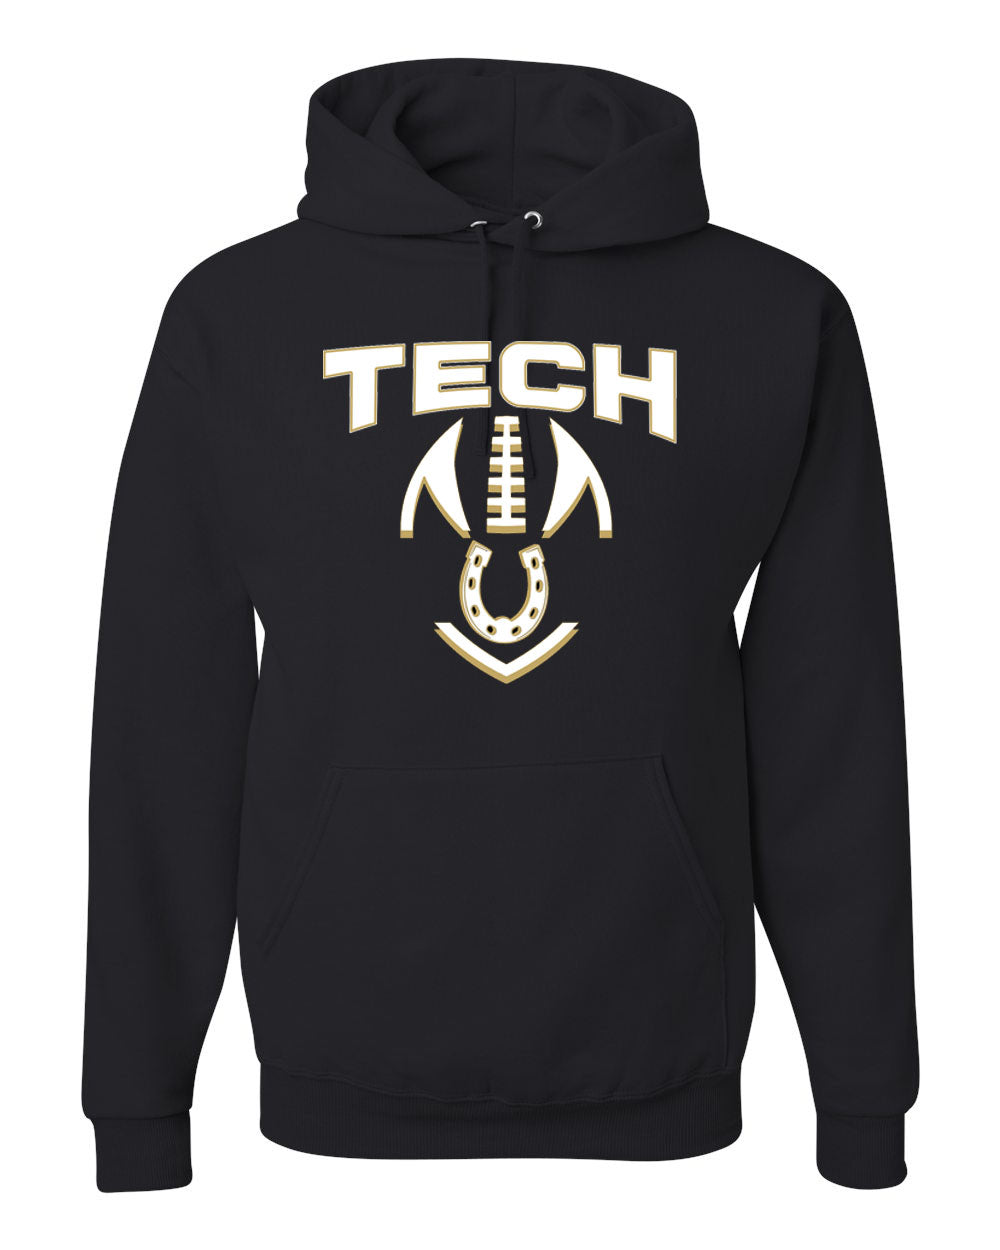 Tech Football Hooded Sweatshirt